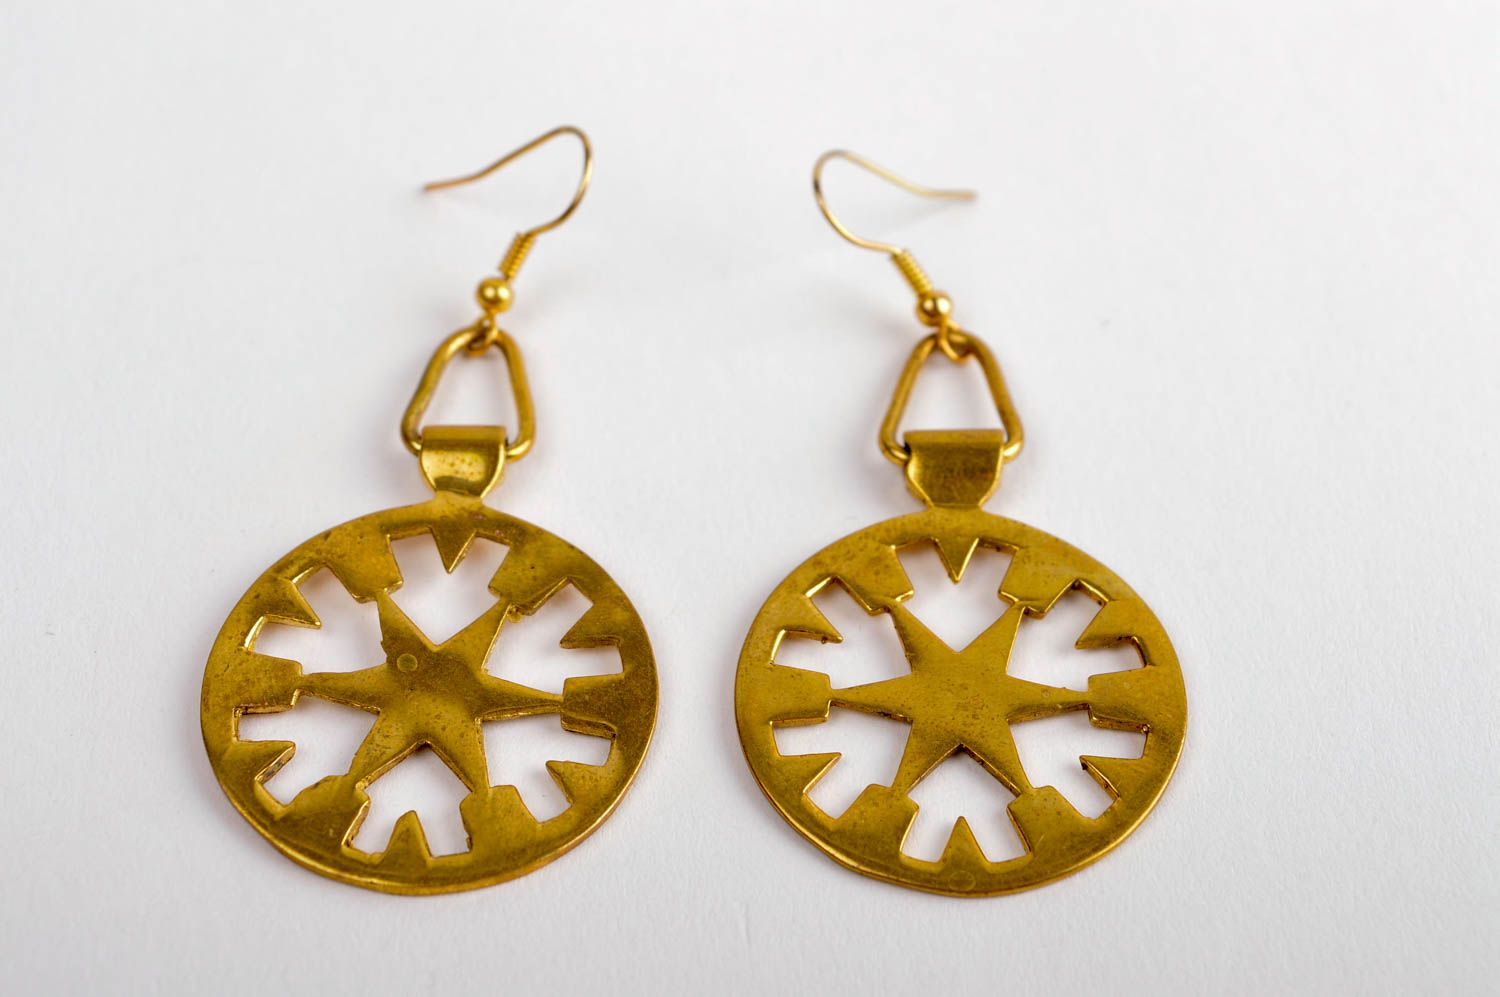 Stylish handmade metal earrings beautiful jewellery fashion trends gift ideas photo 3